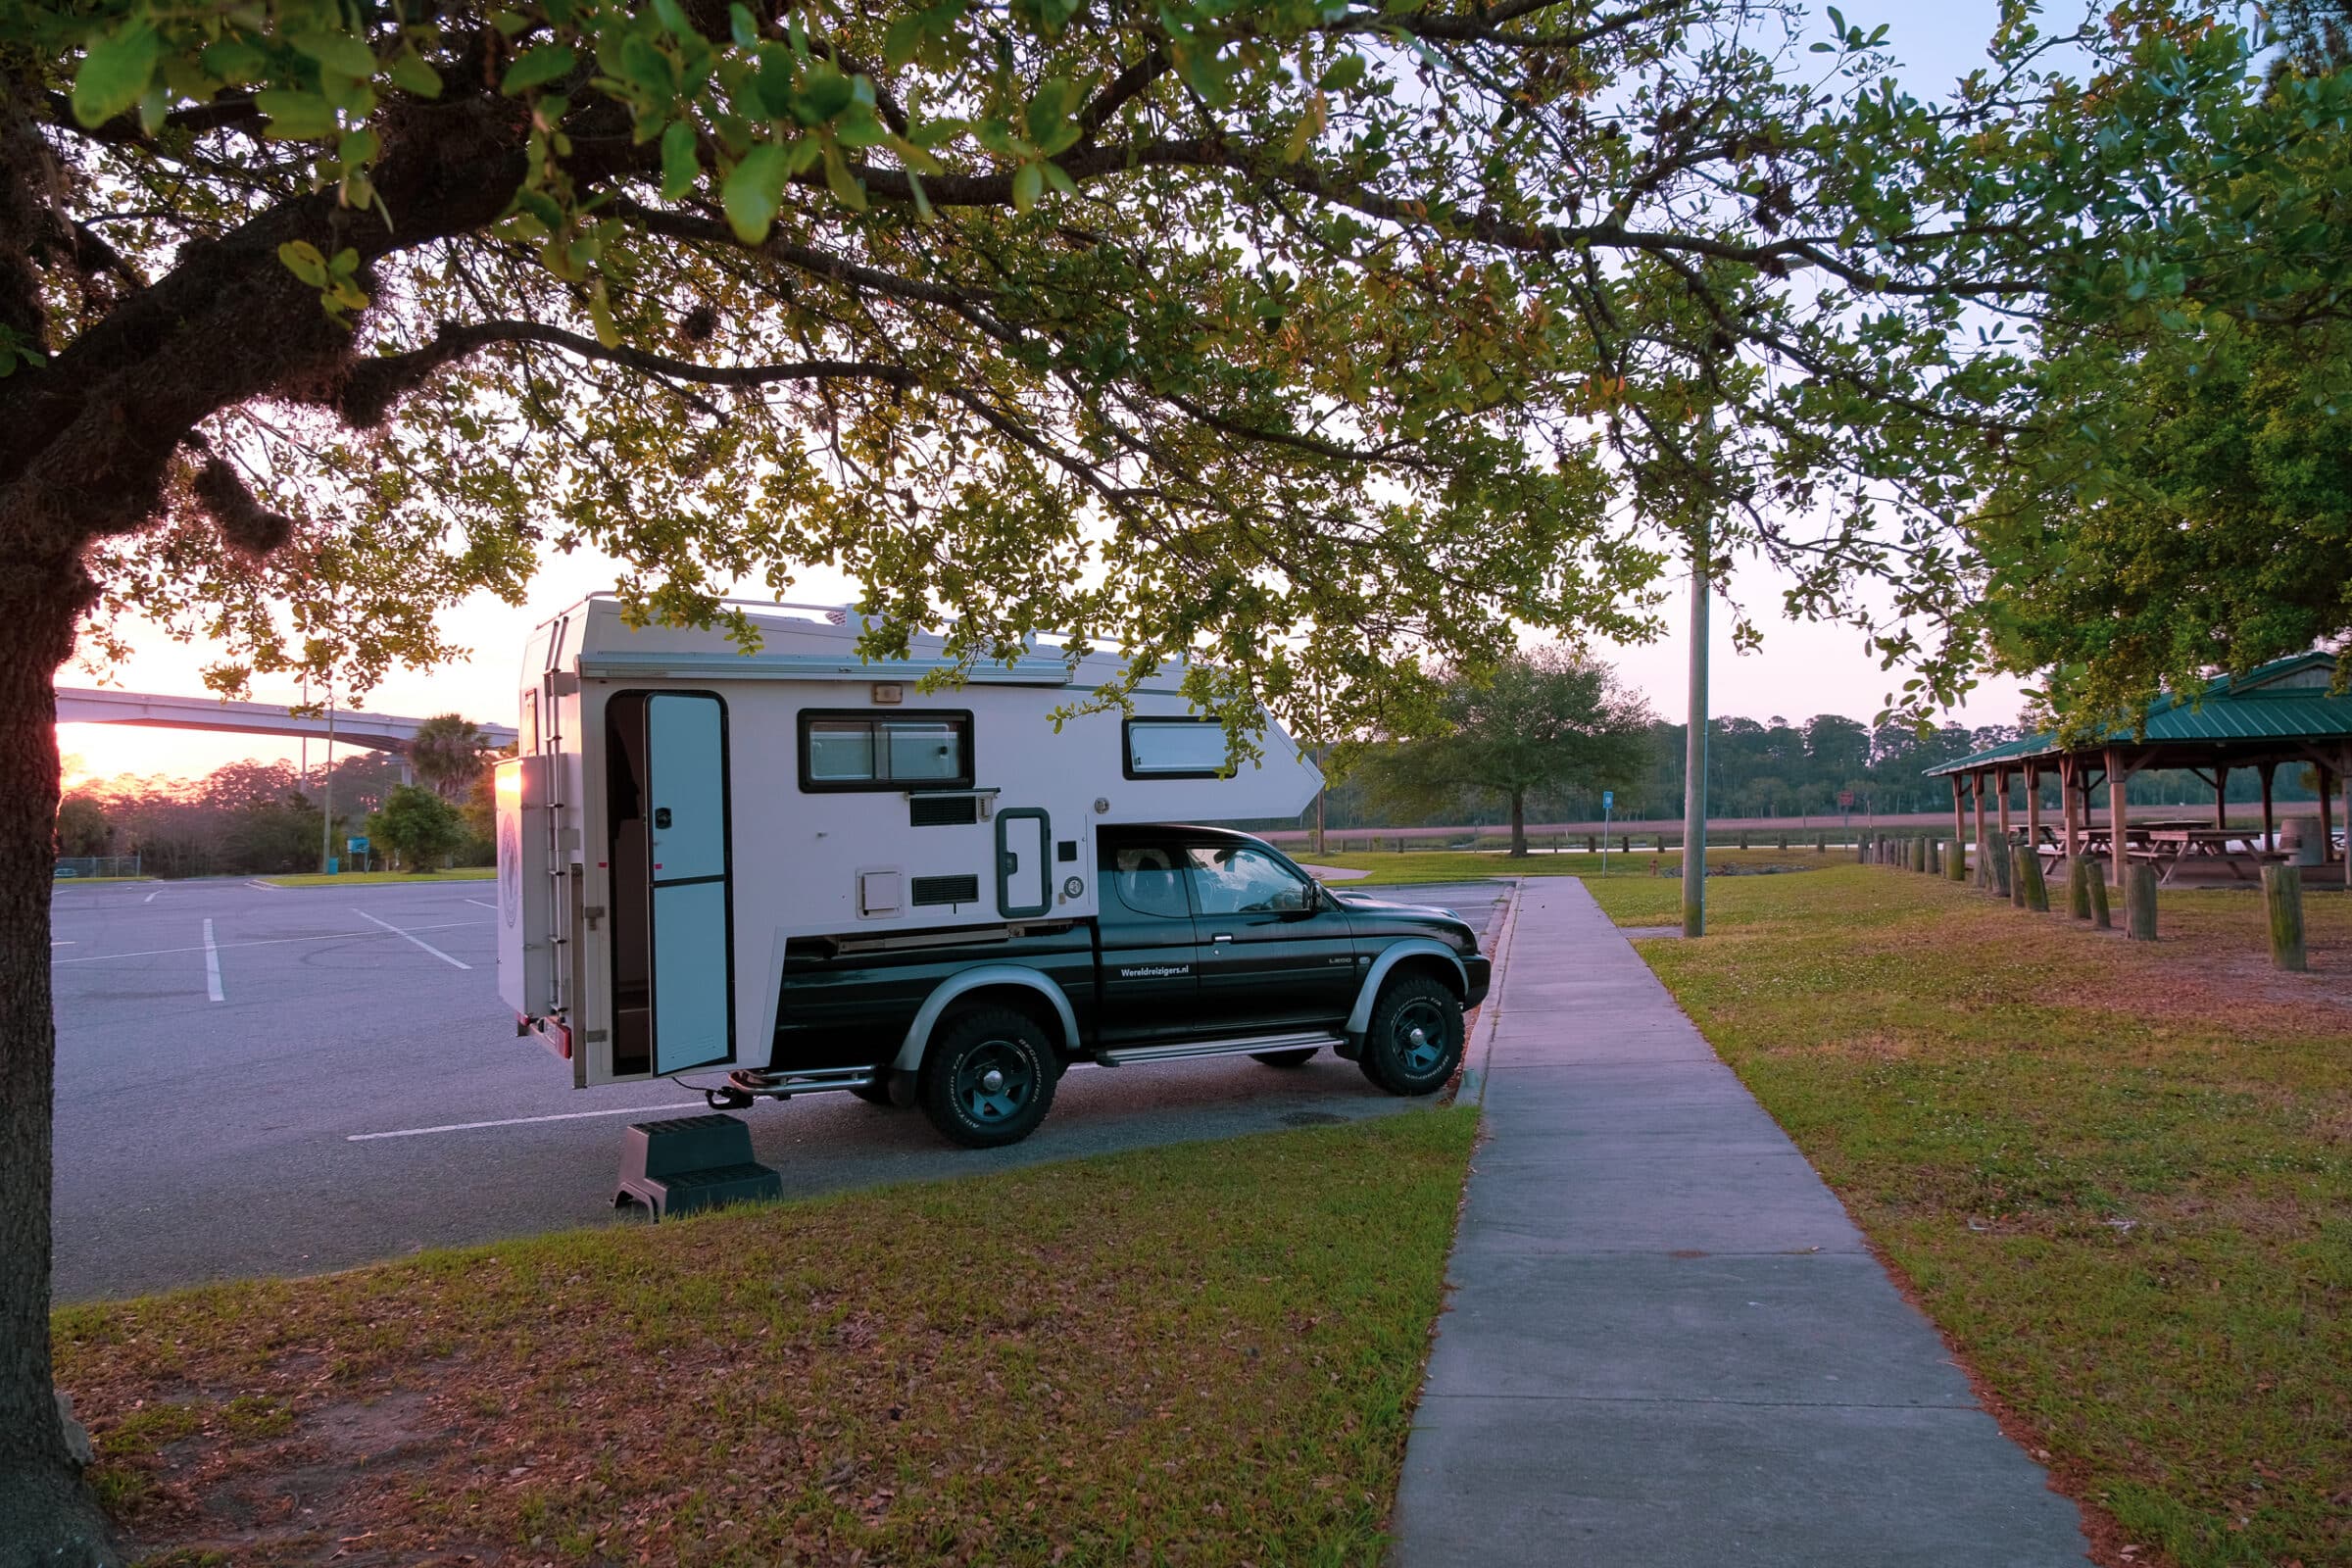 Gratis kamperen op Mill Stone Landing, Hardeeville | Wat te doen + tips voor Savannah, Georgia